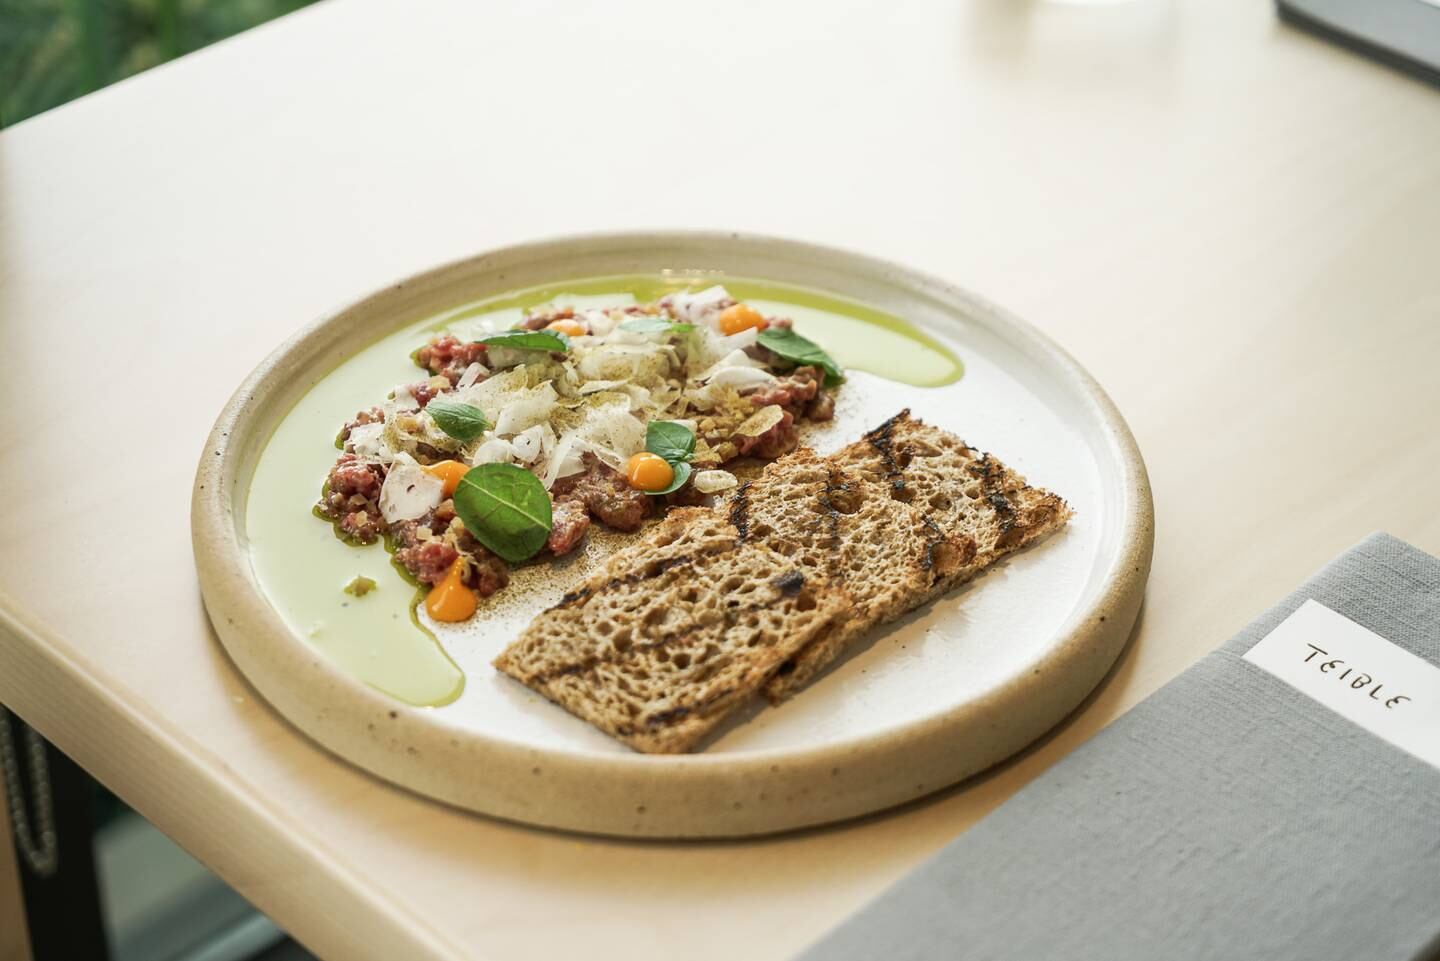 The beef garum pays homage to Anthony Bourdain's steak tartare. Photo: Teible